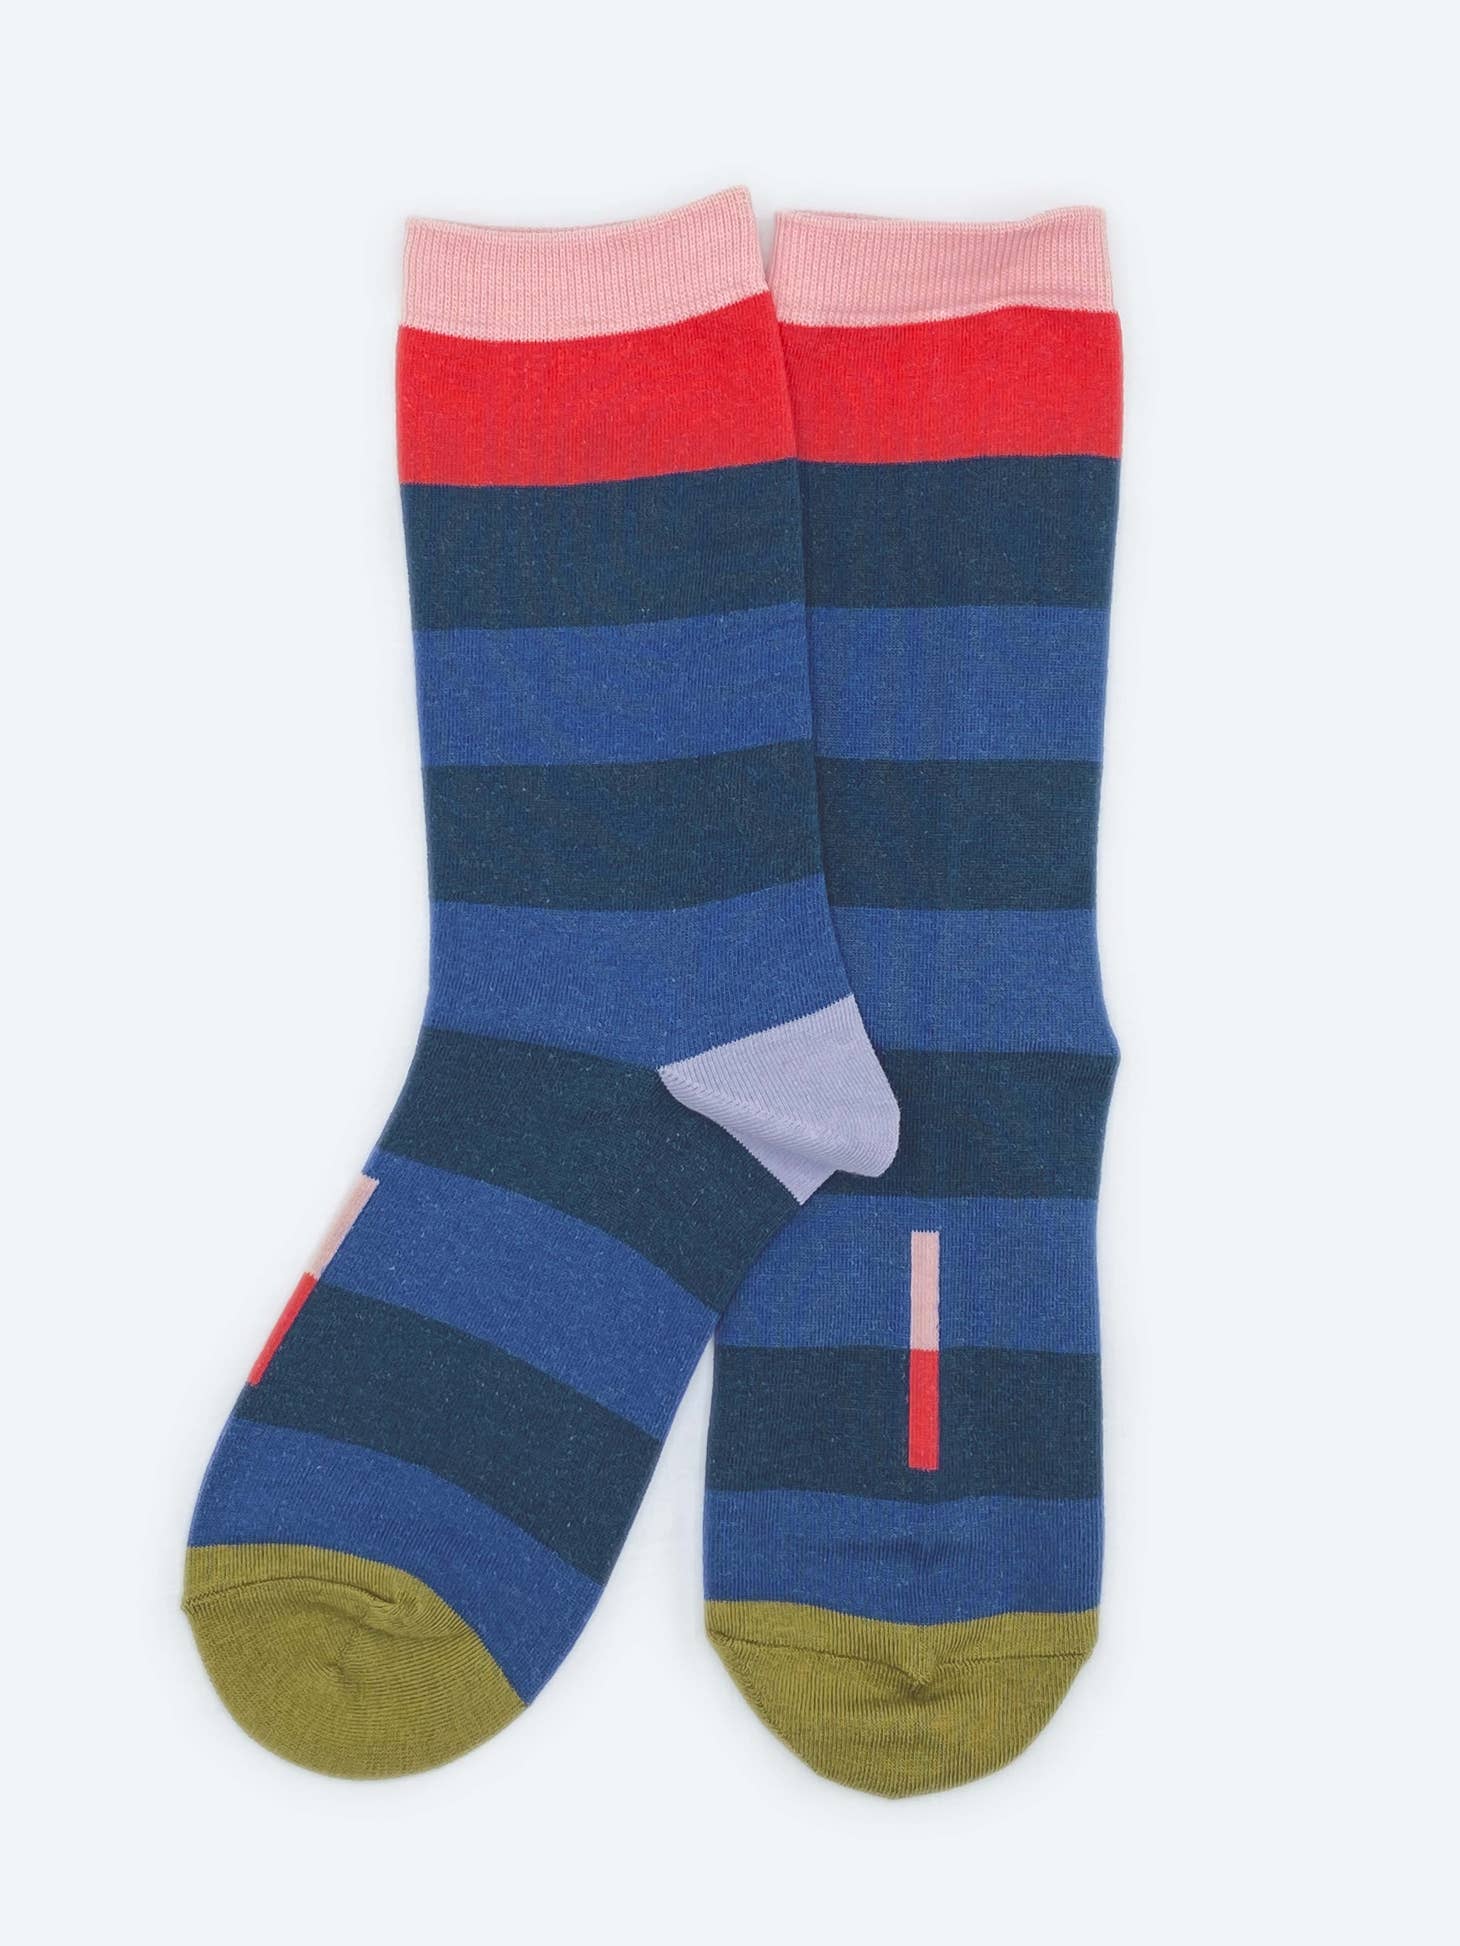 Hooray Sock Co. Filmore Socks, Men's